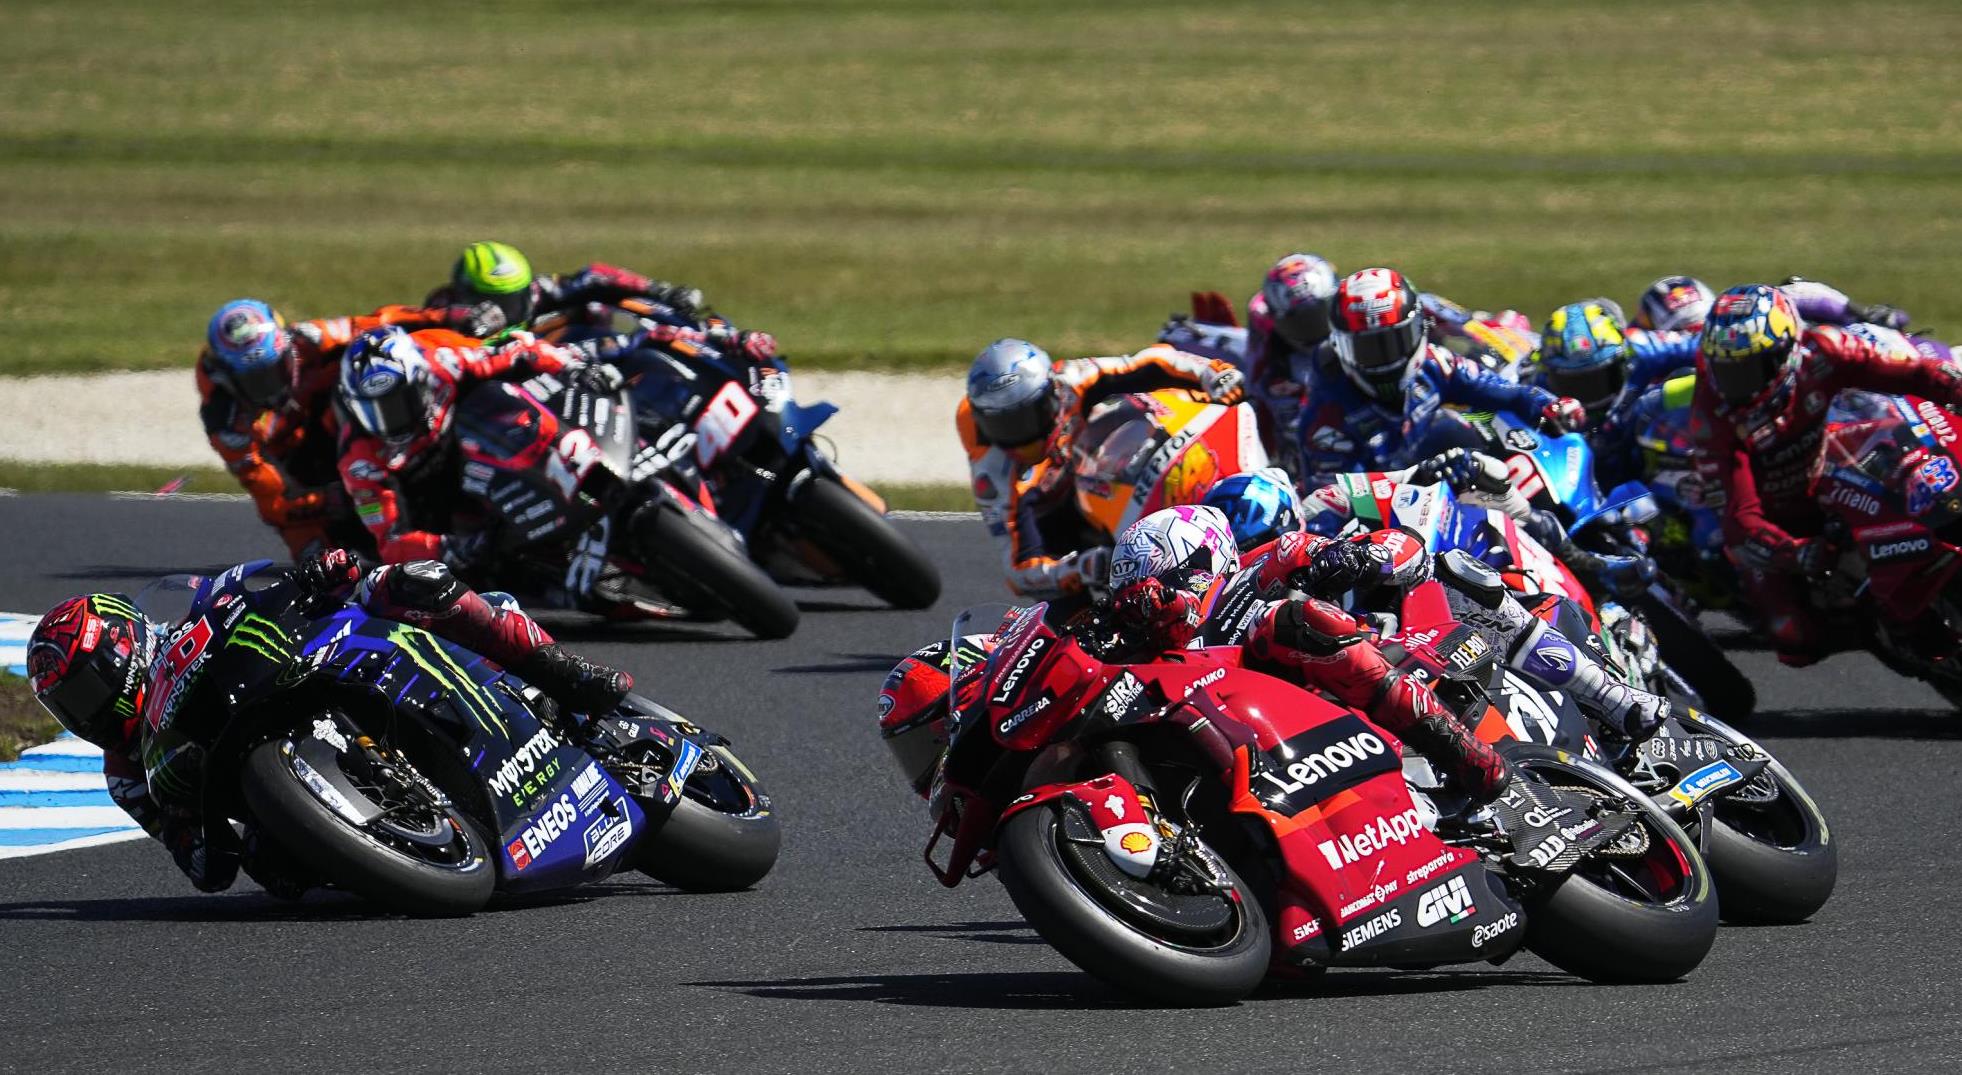 MotoGP: Corridas Sprint prometem animar nova temporada - MotoSport